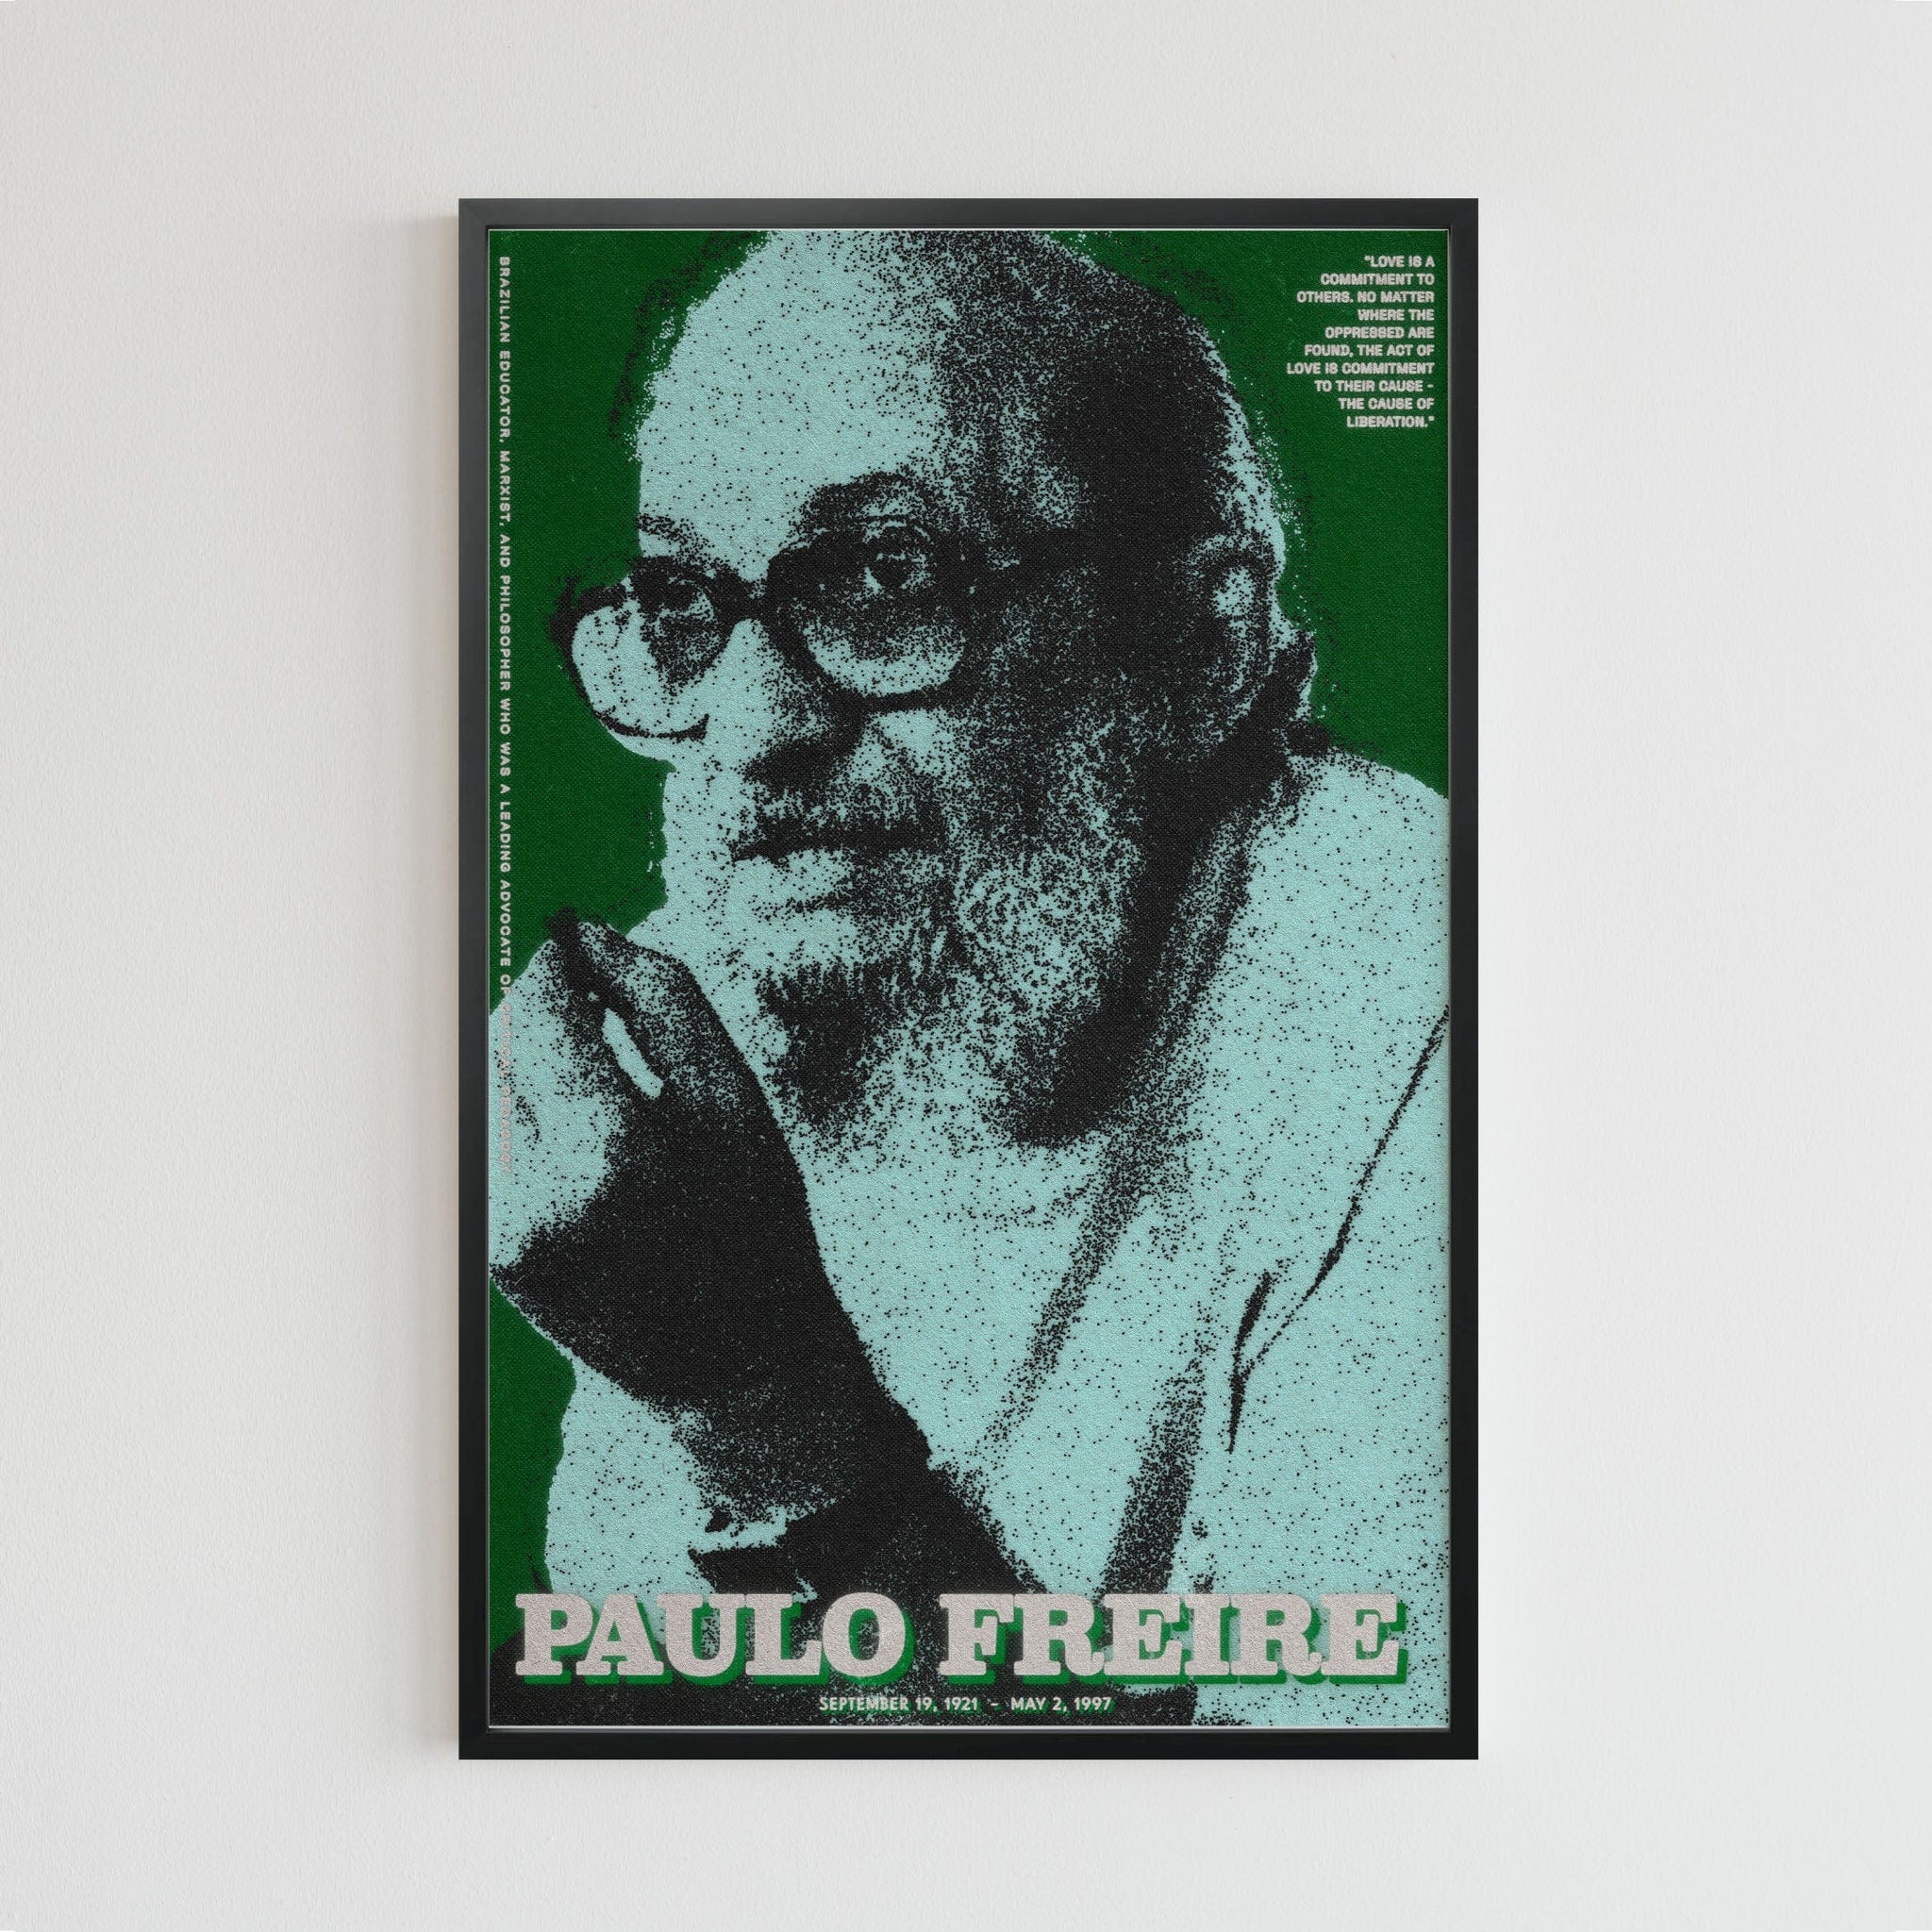 Paulo Freire (11 x 17 Poster print)